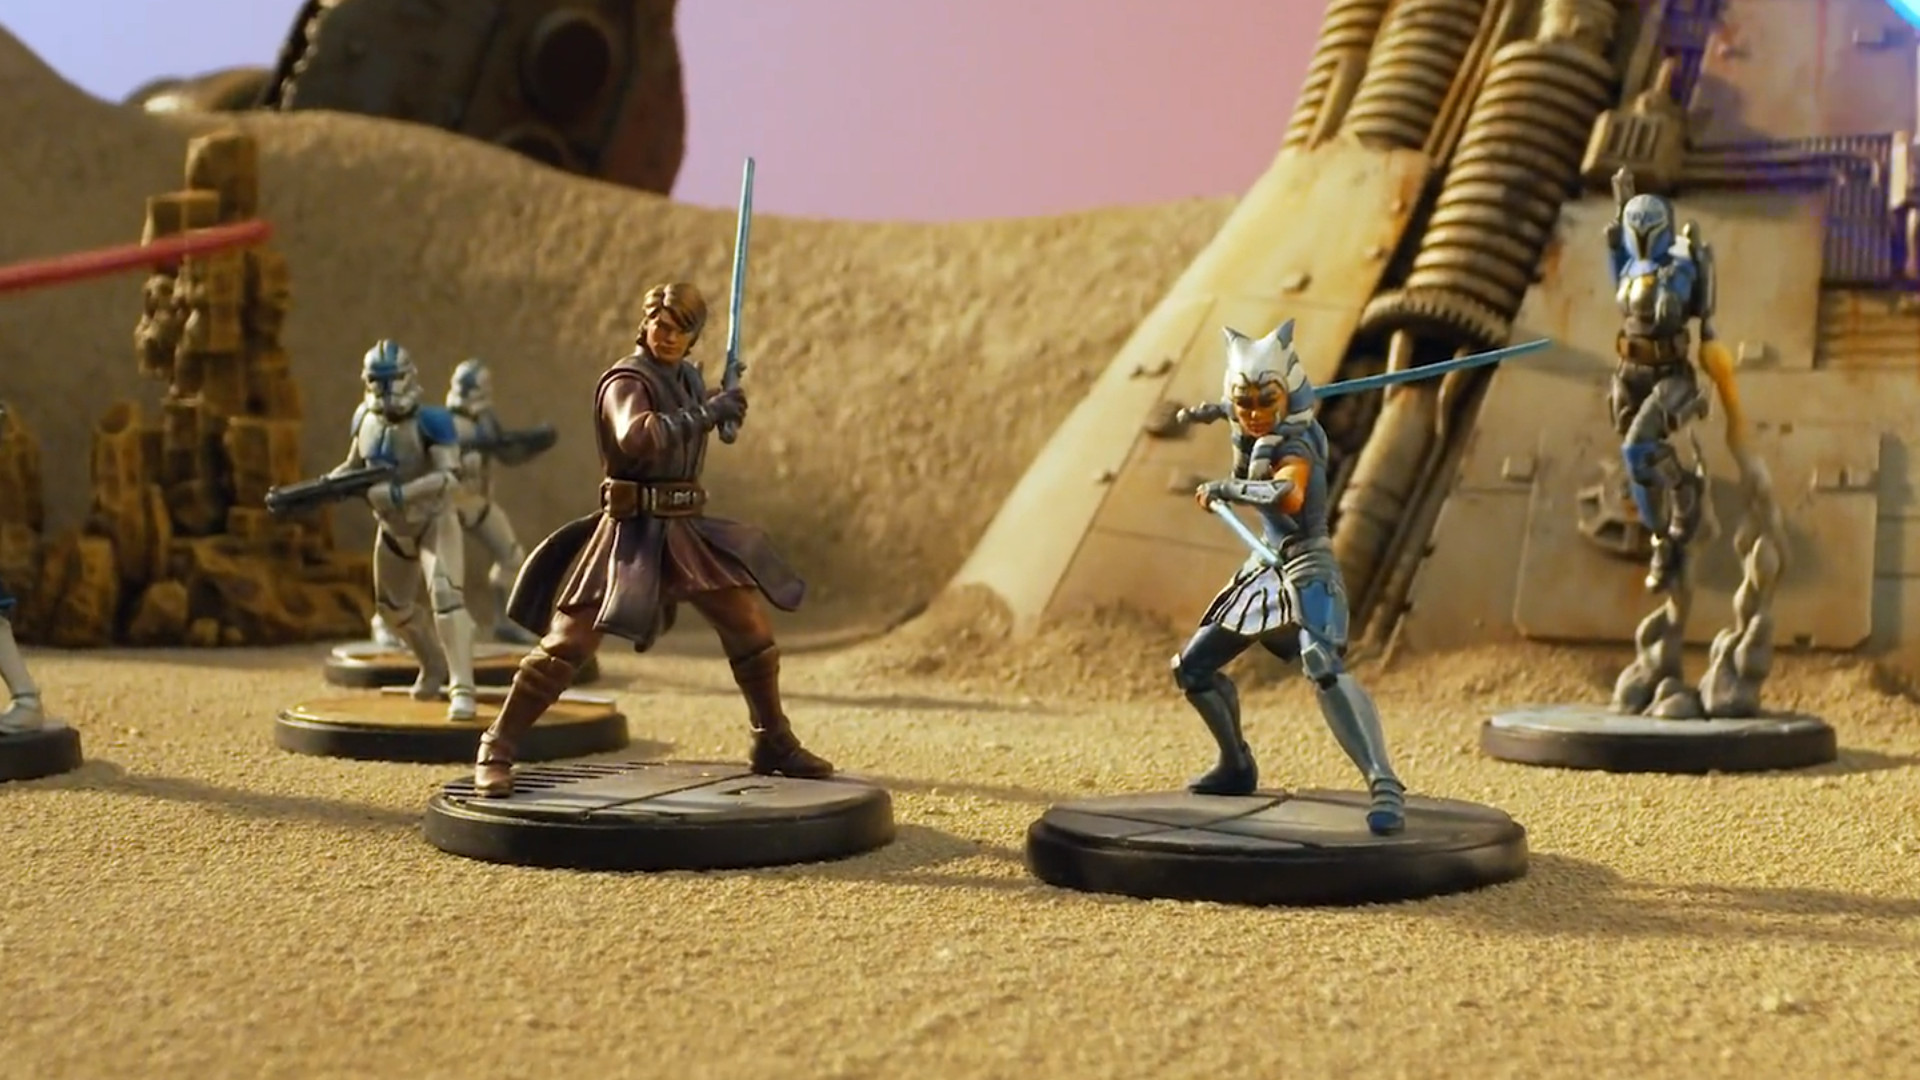 Star Wars: Legion - Clone Wars Core Set Review